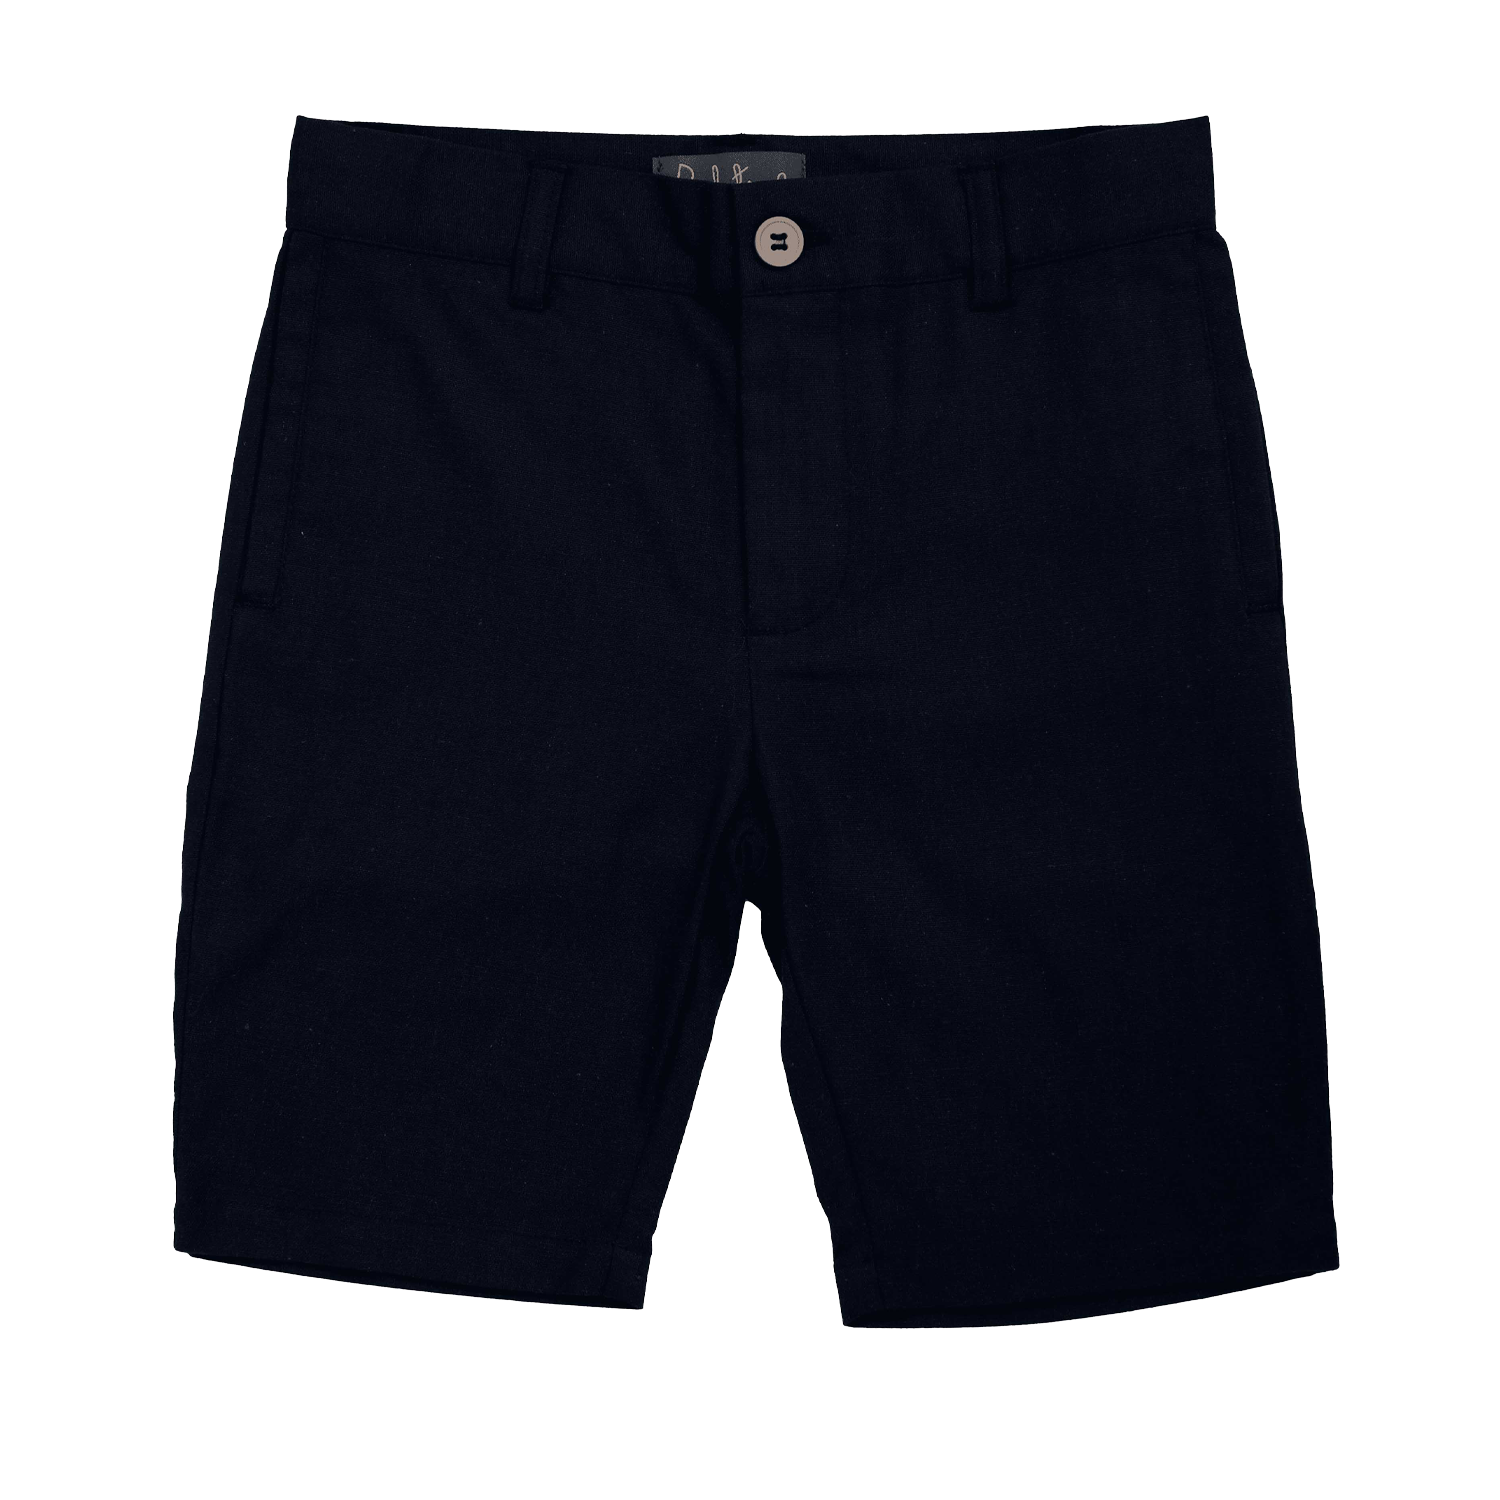 Belati Bermuda Shorts - Black